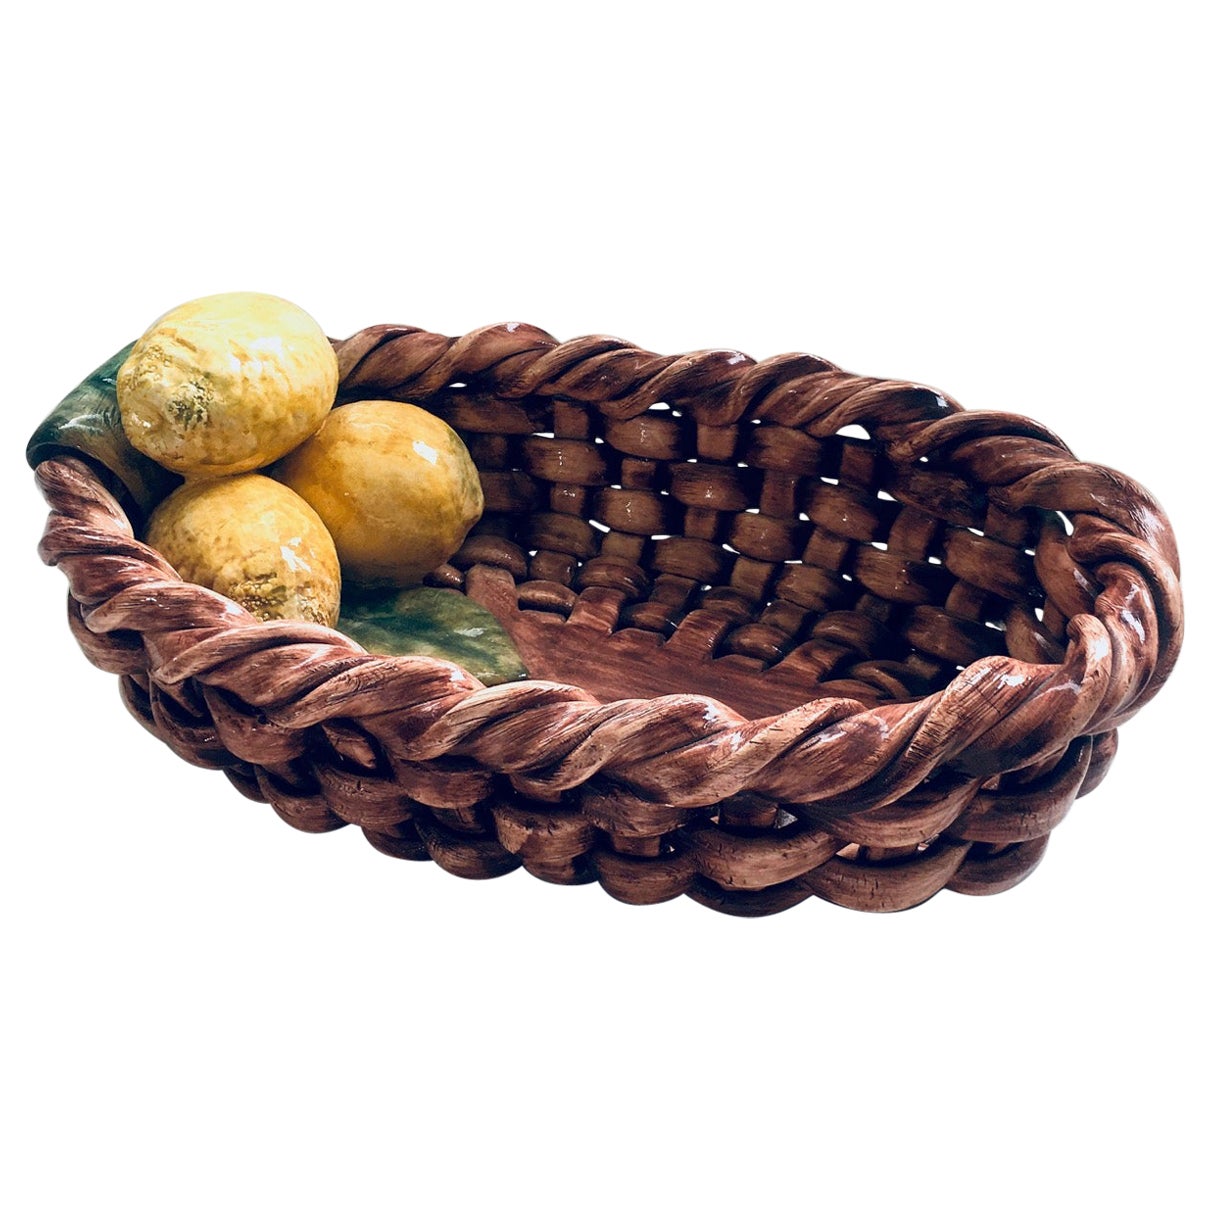 Studio Pottery Citrus Fruit Basket by J. Santos for Alcobaca, Portugal 1950's